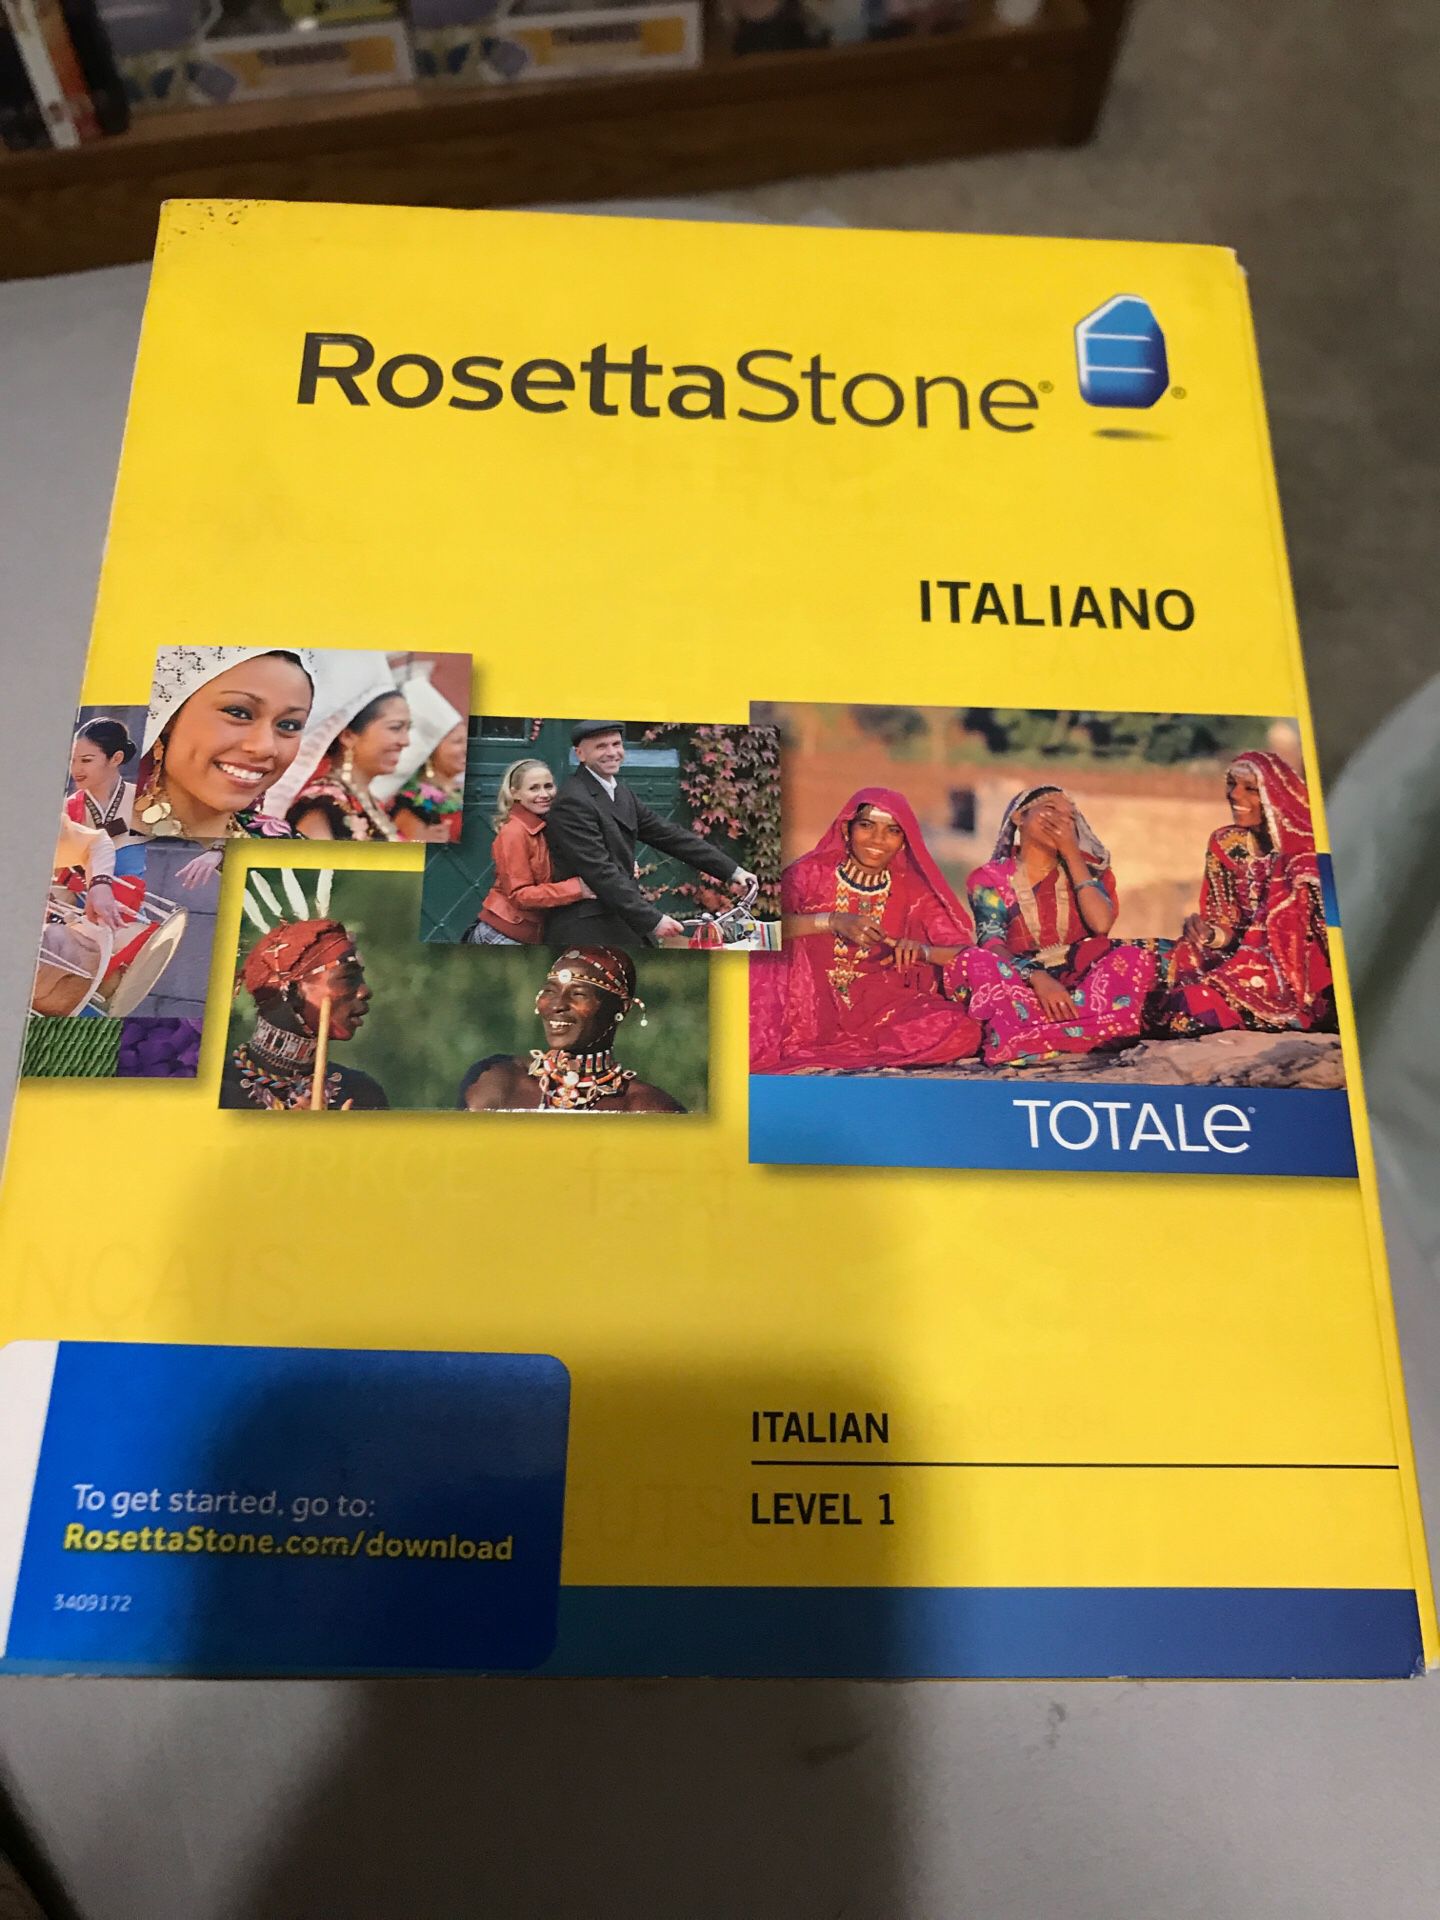 Rosetta Stone Italian level 1 course